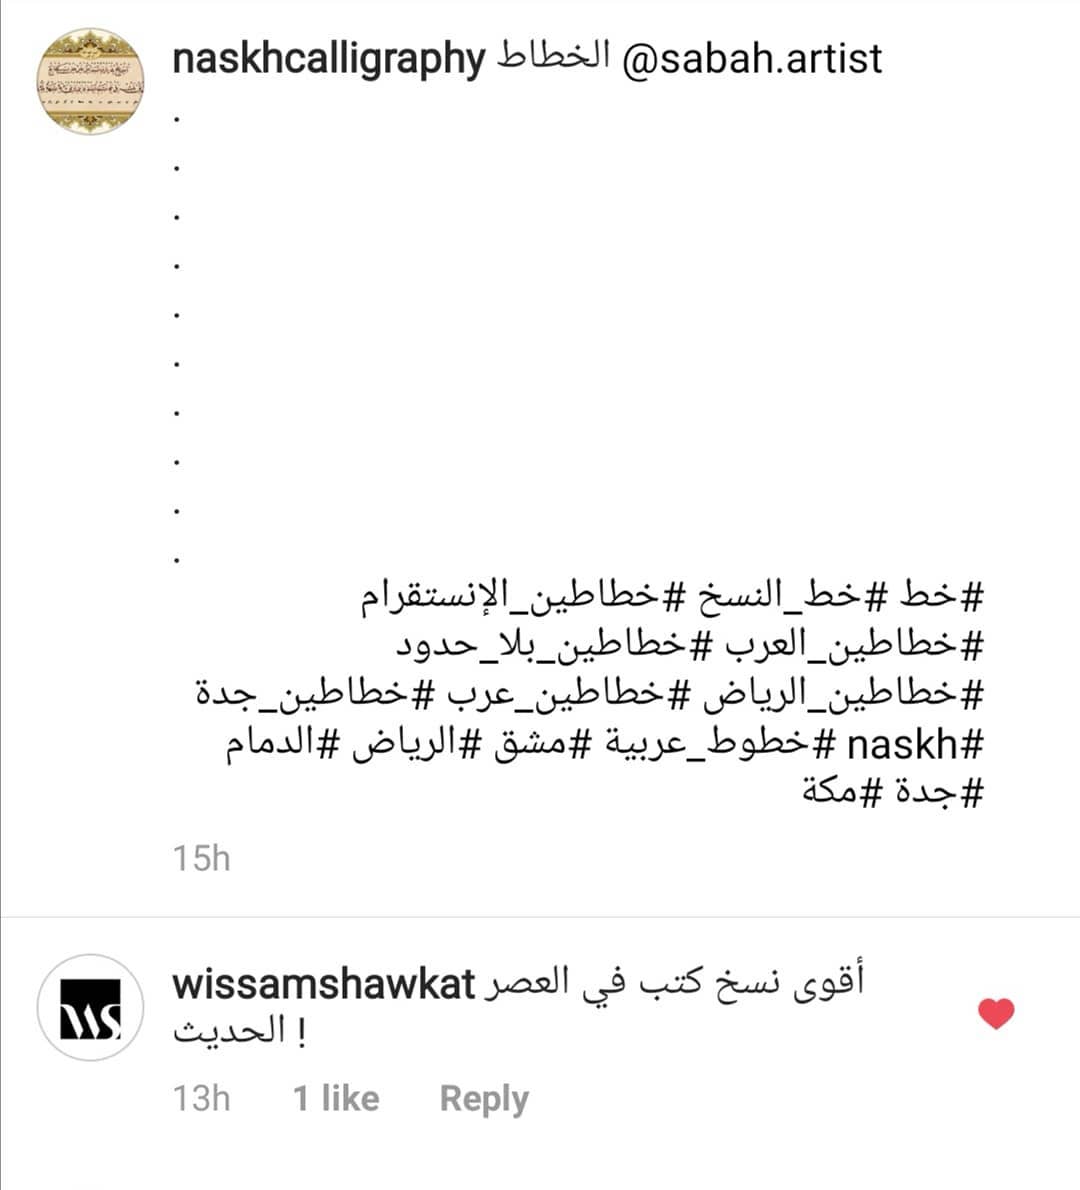 Download karya Kaligrafi Naskhi عملاق يشهد لعملاق.
@wissamshawkat @sabah.artist…-naskhcalligraphy